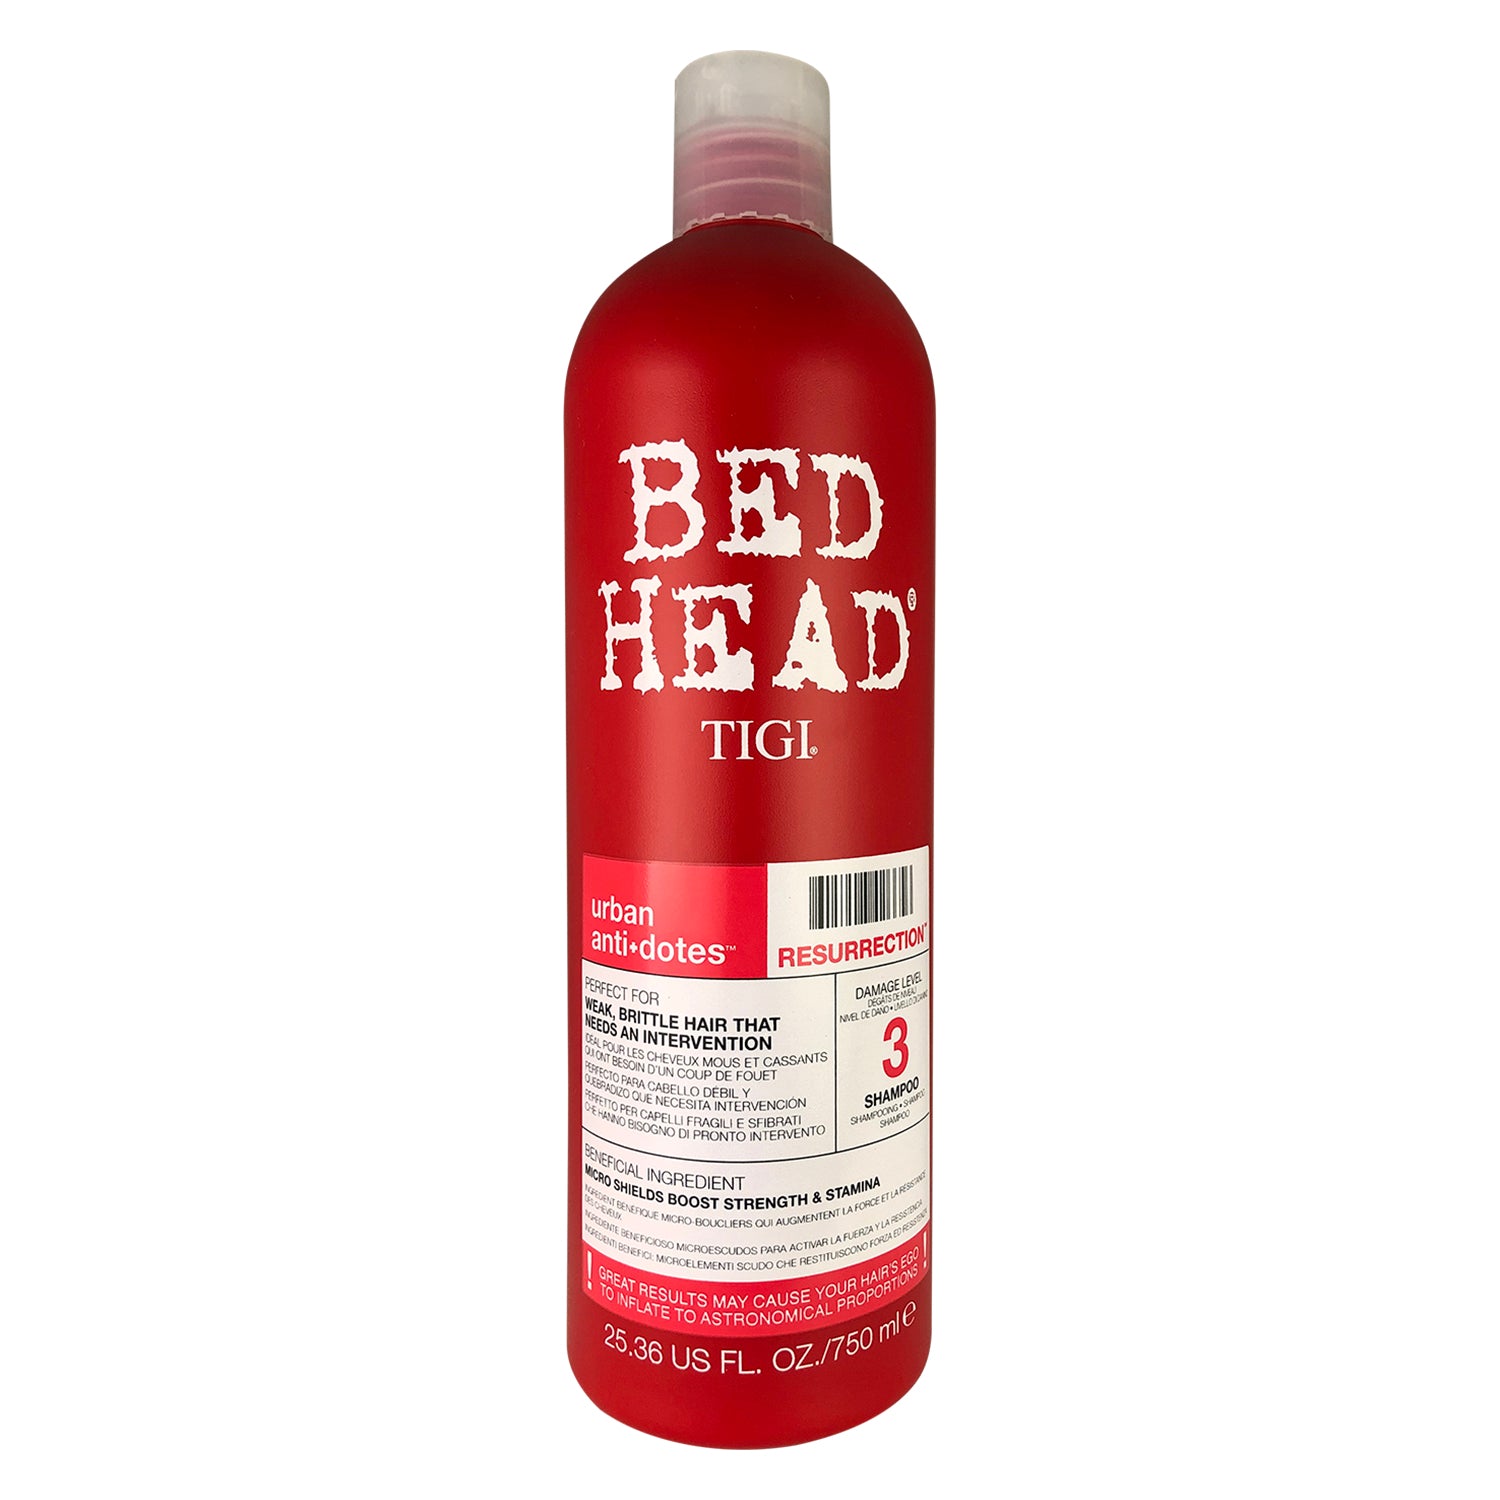 Bed Head Tigi Urban Antidotes Resurrection Hair Shampoo #3 25.36 oz For Weak Brittle Hair with damage level 3